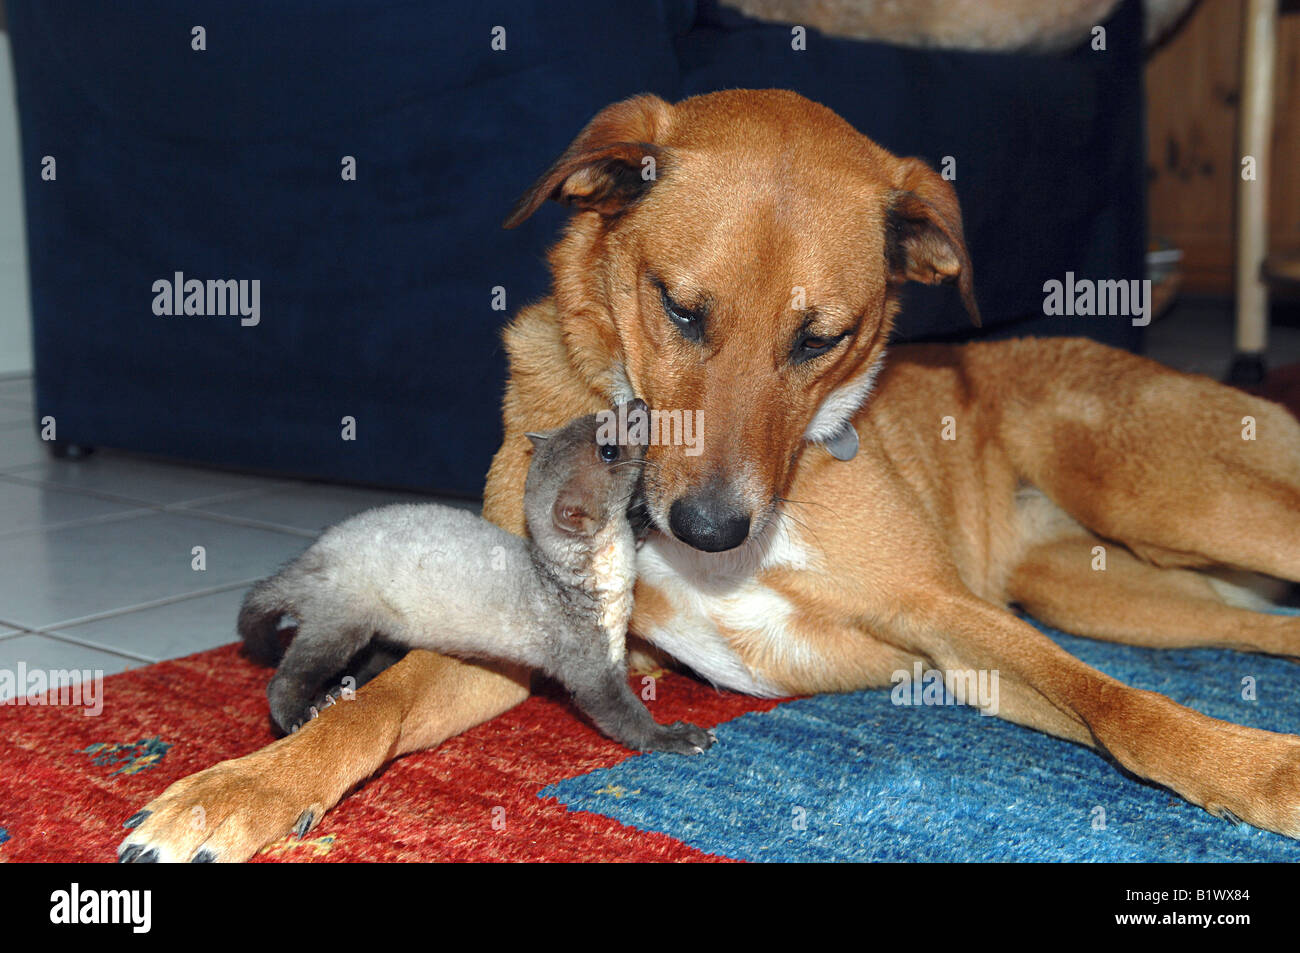 animal friendship: half breed dog and young beech marten - smooching Stock Photo